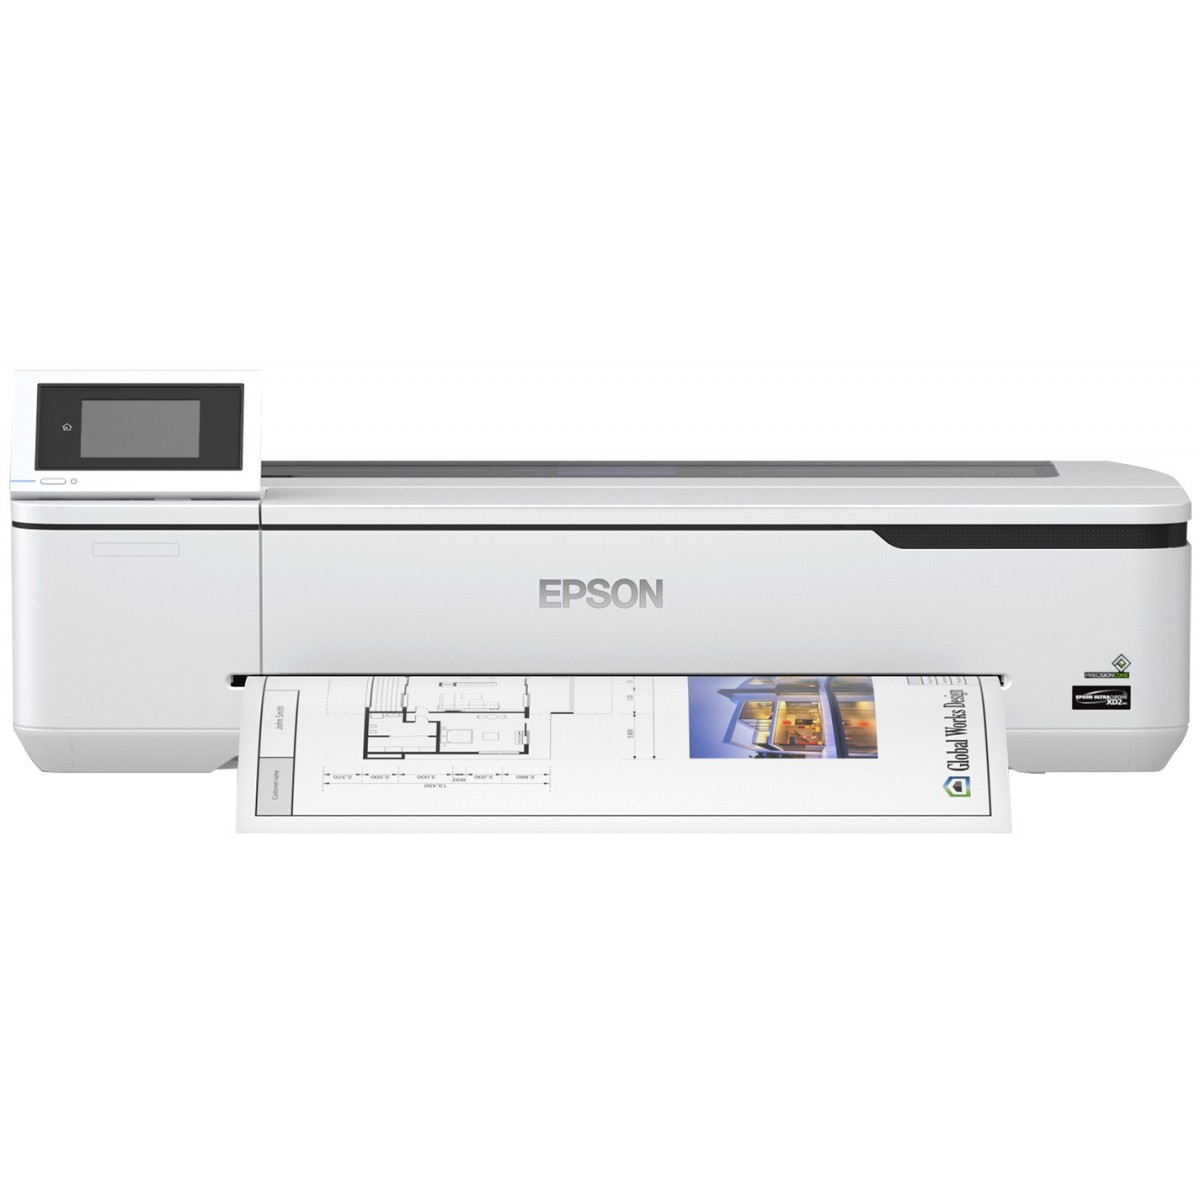 Epson SureColor SC-T3100N - Inkjet - 2400 x 1200 DPI - ESC/P-R,HP-GL/2,HP-RTL - Pigment black - Pigment cyan - Pigment yellow - 